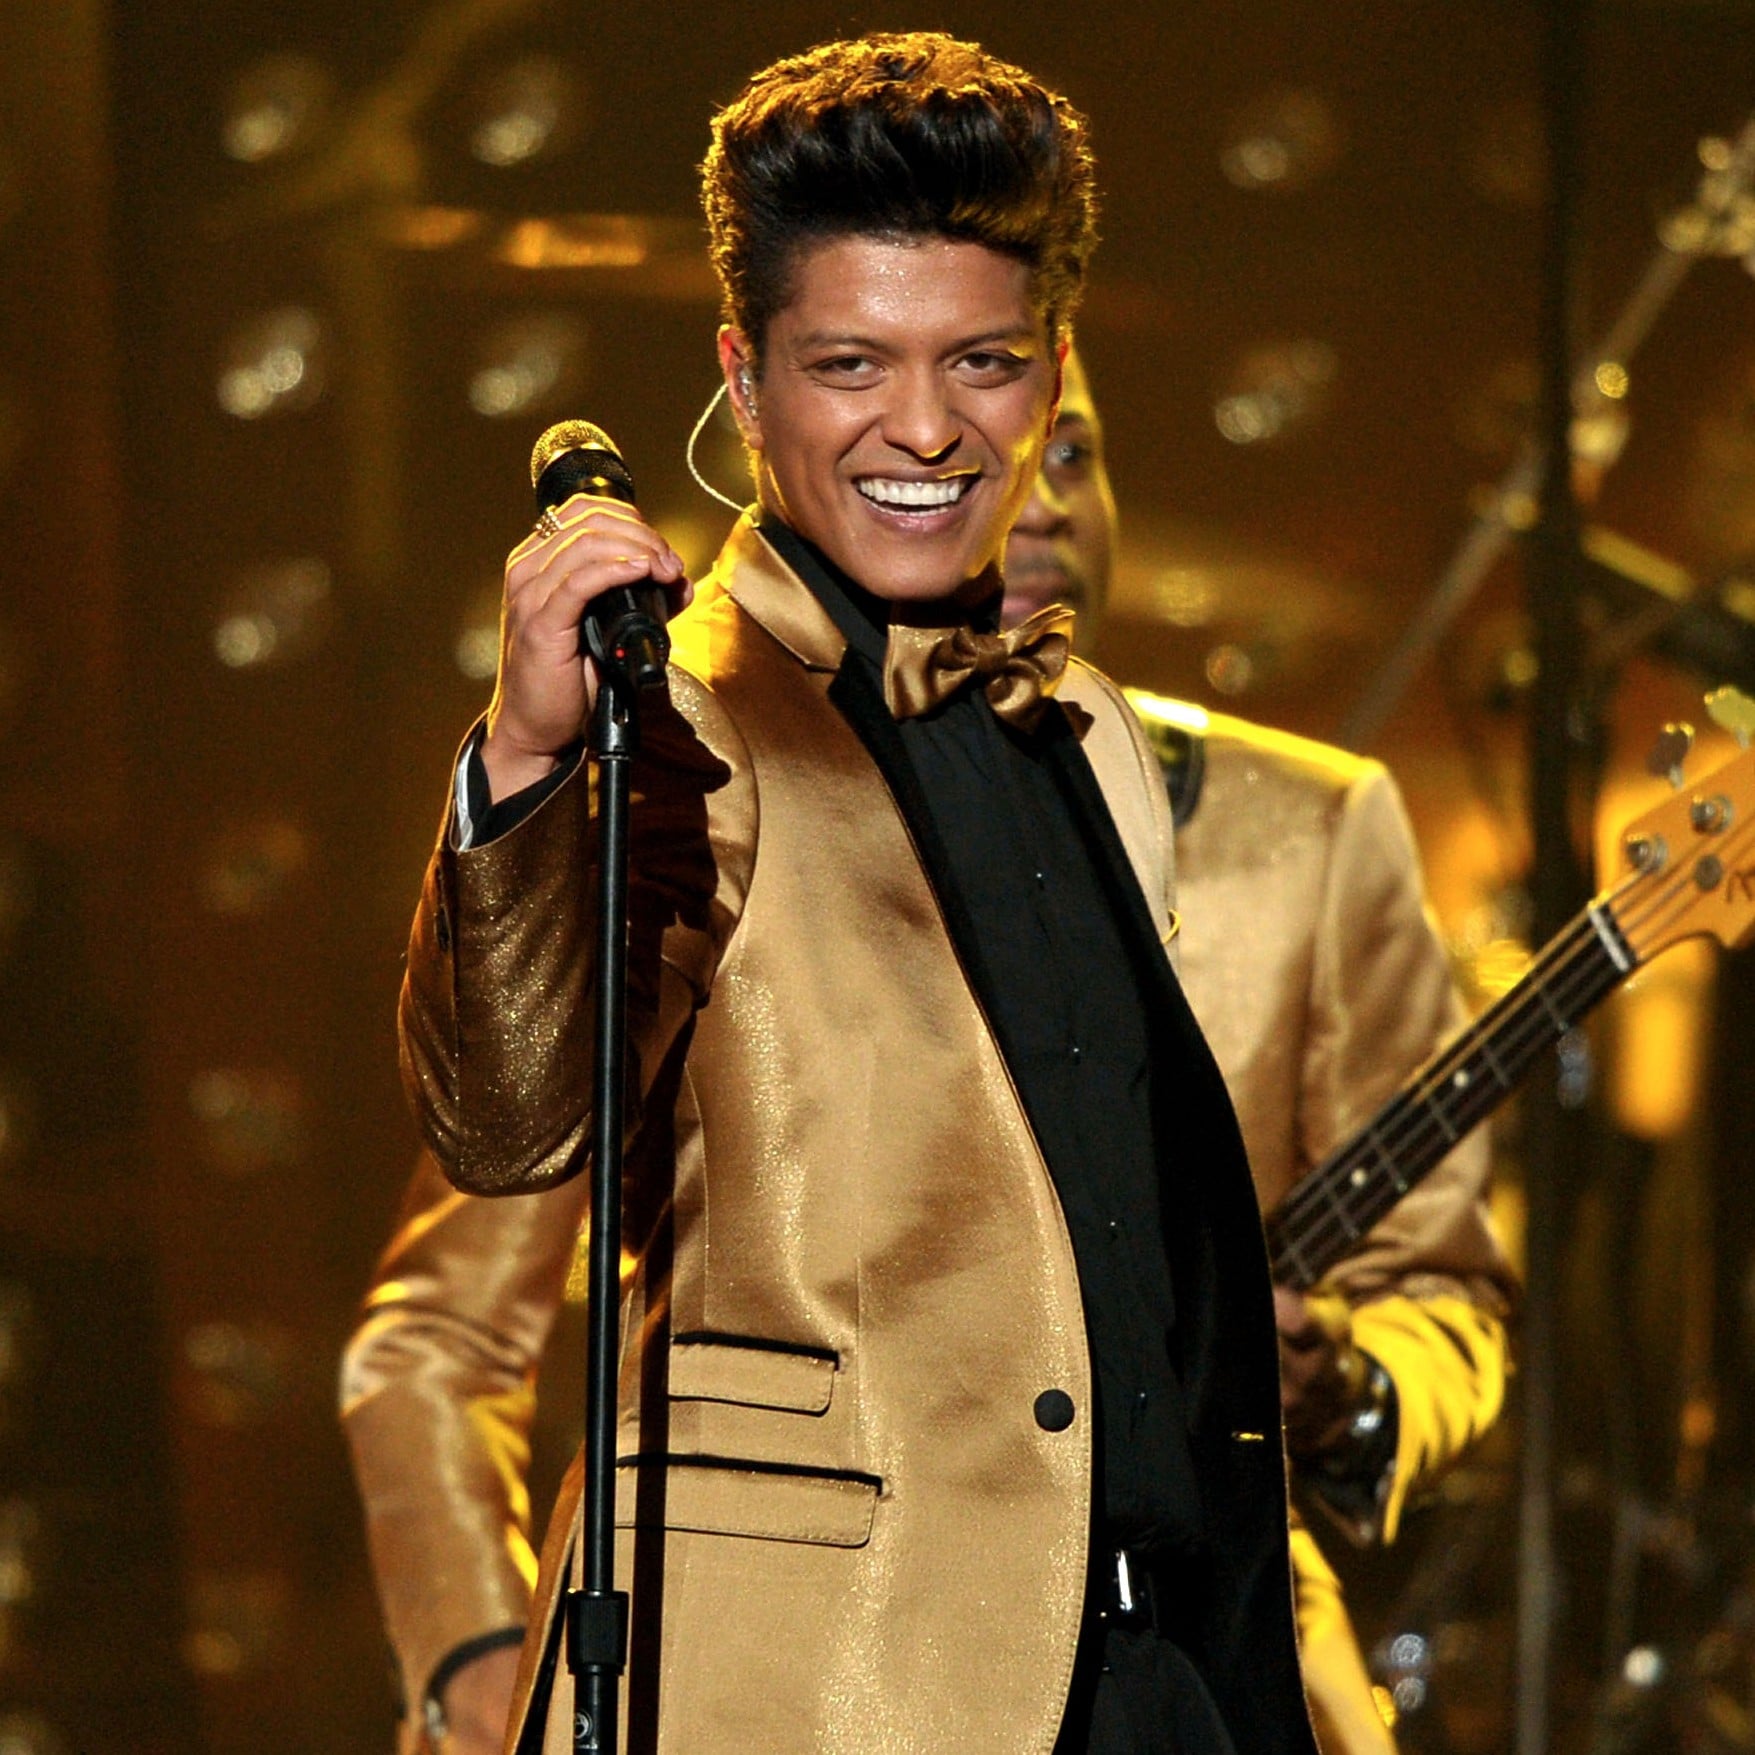 Bruno Mars Songs For Weddings | POPSUGAR Entertainment